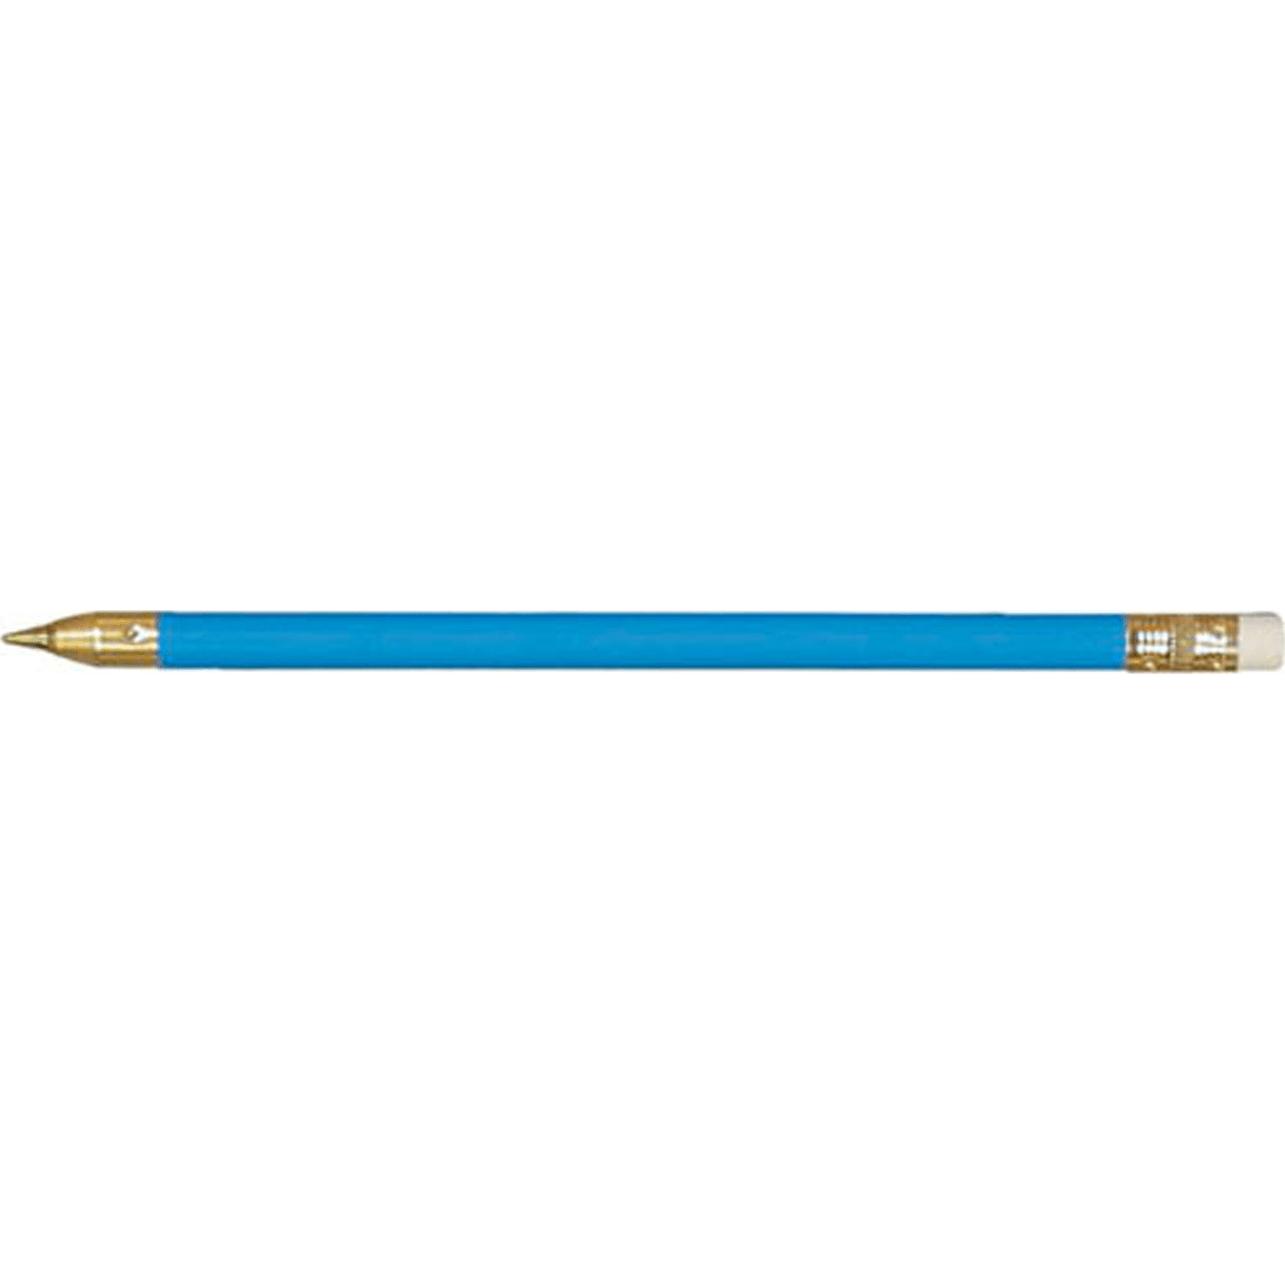 Light Blue AAccura Point Pen